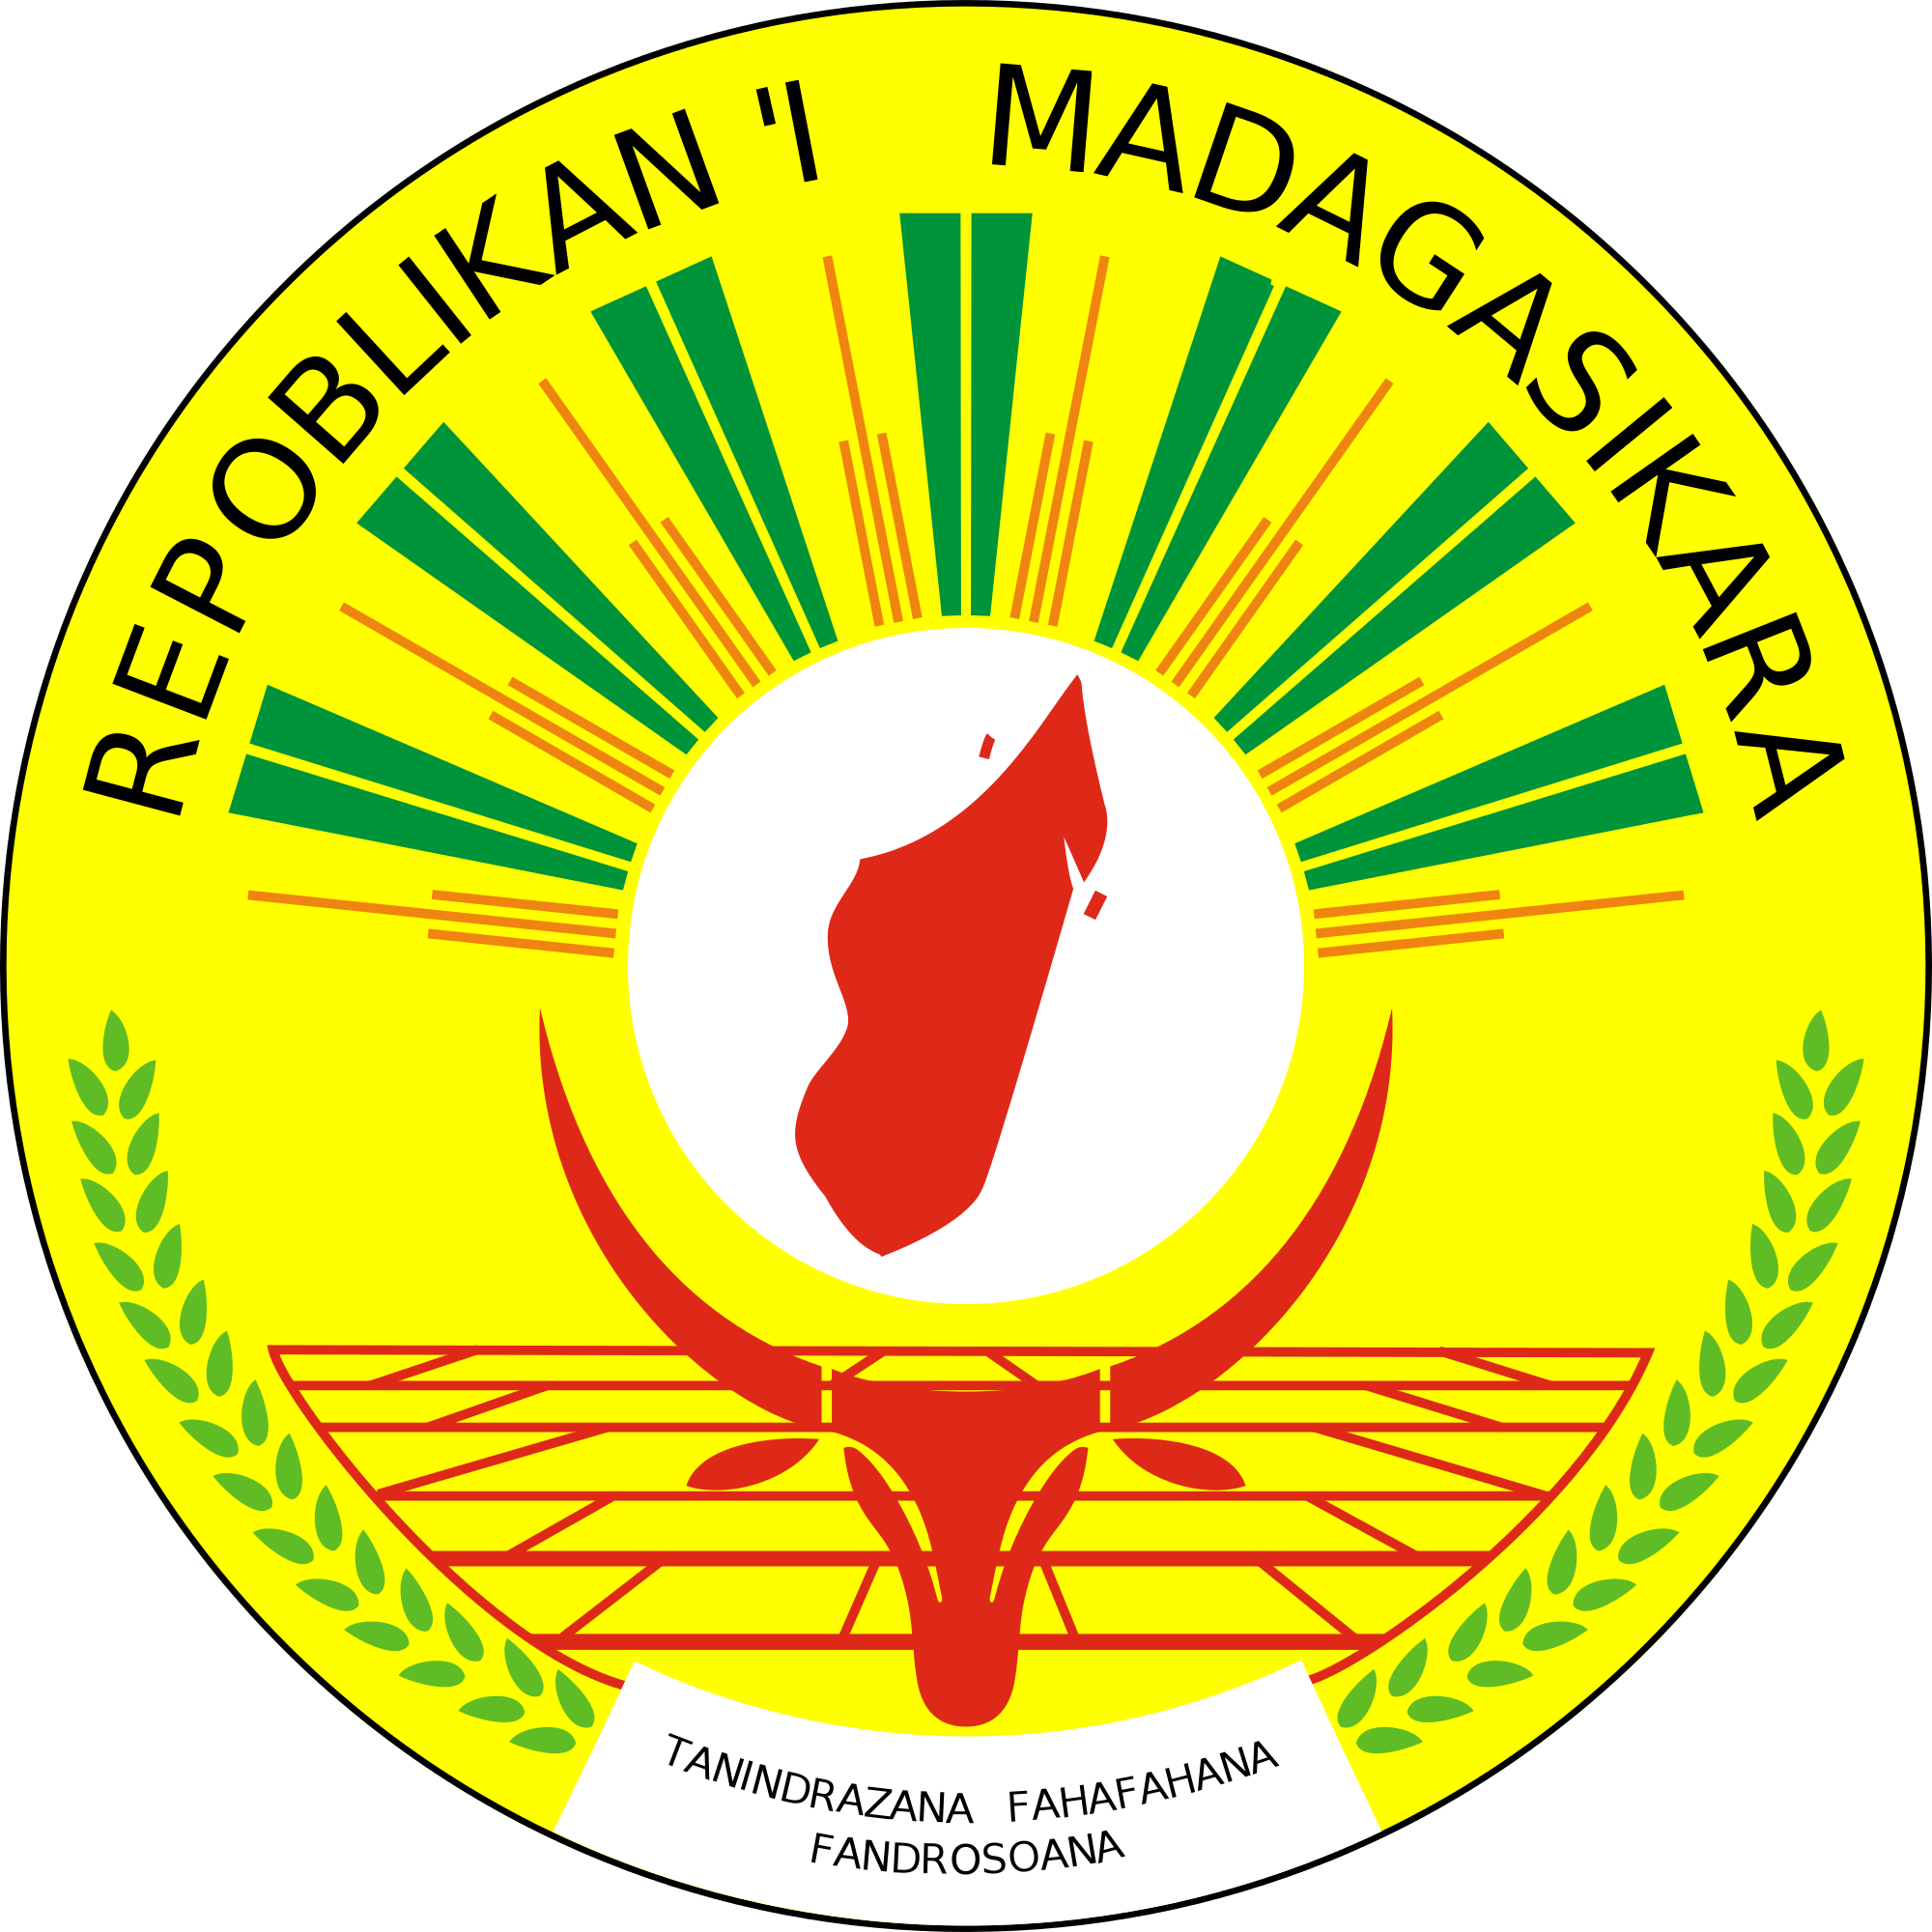 Emblem of Madagascar